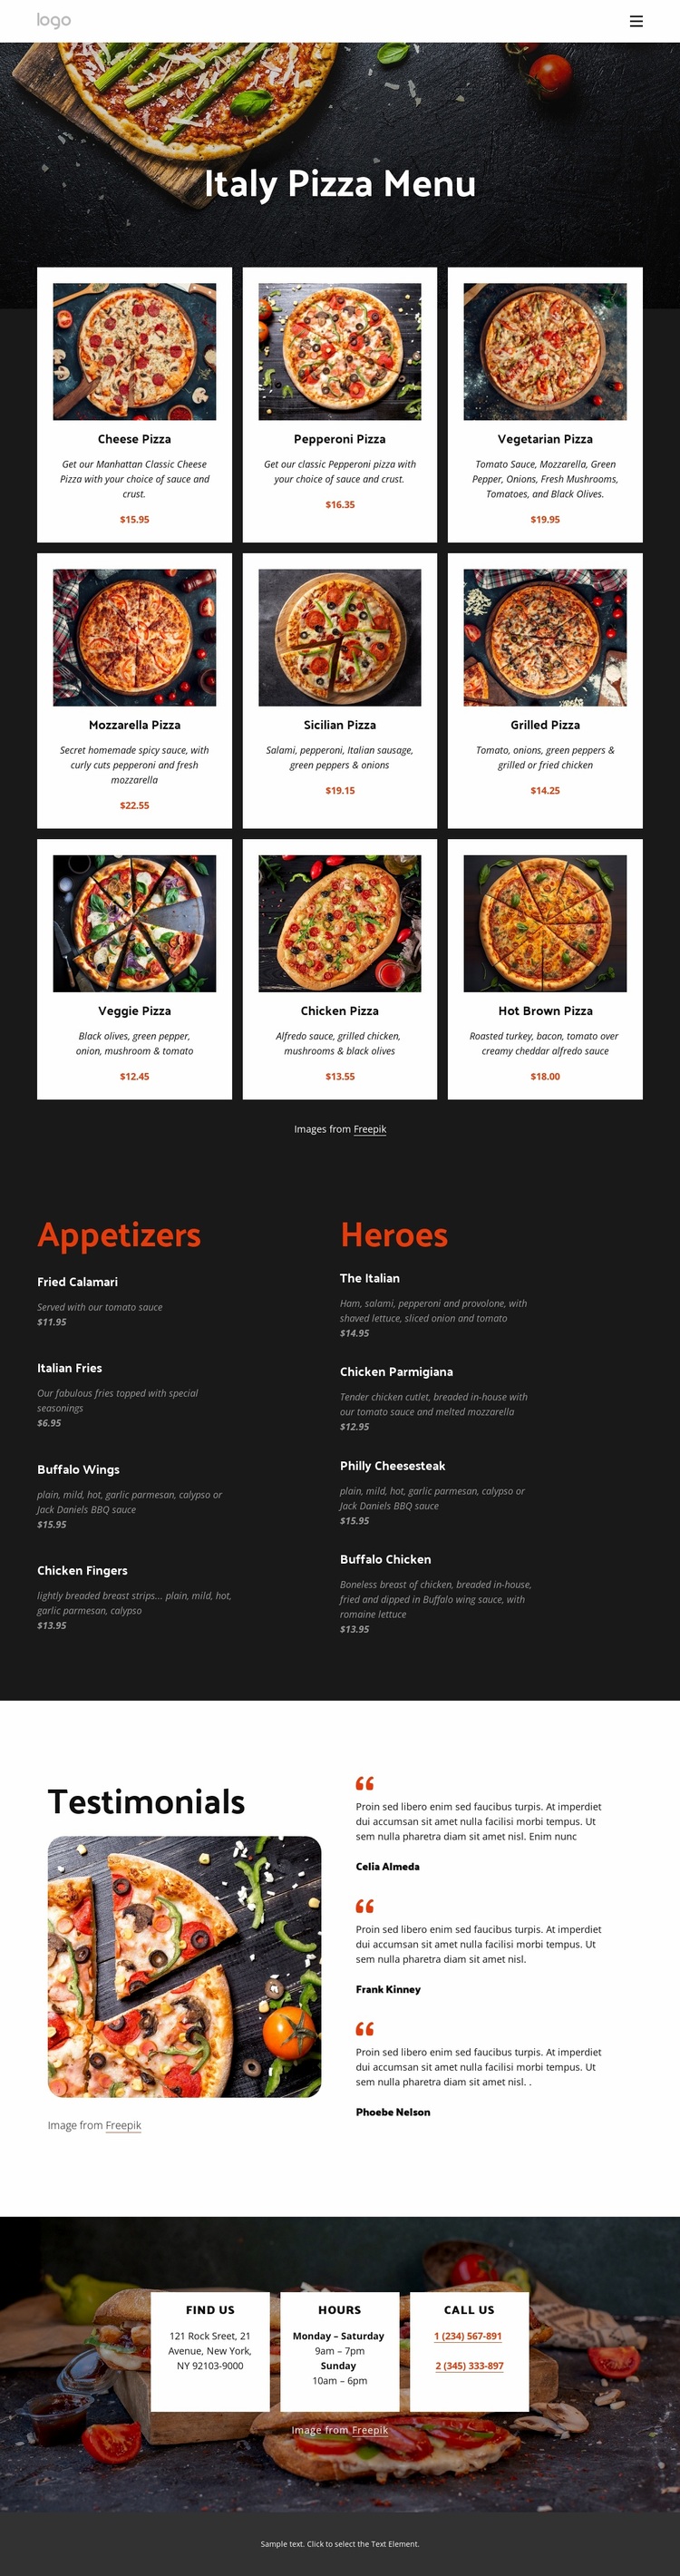 Our pizza menu Website Design